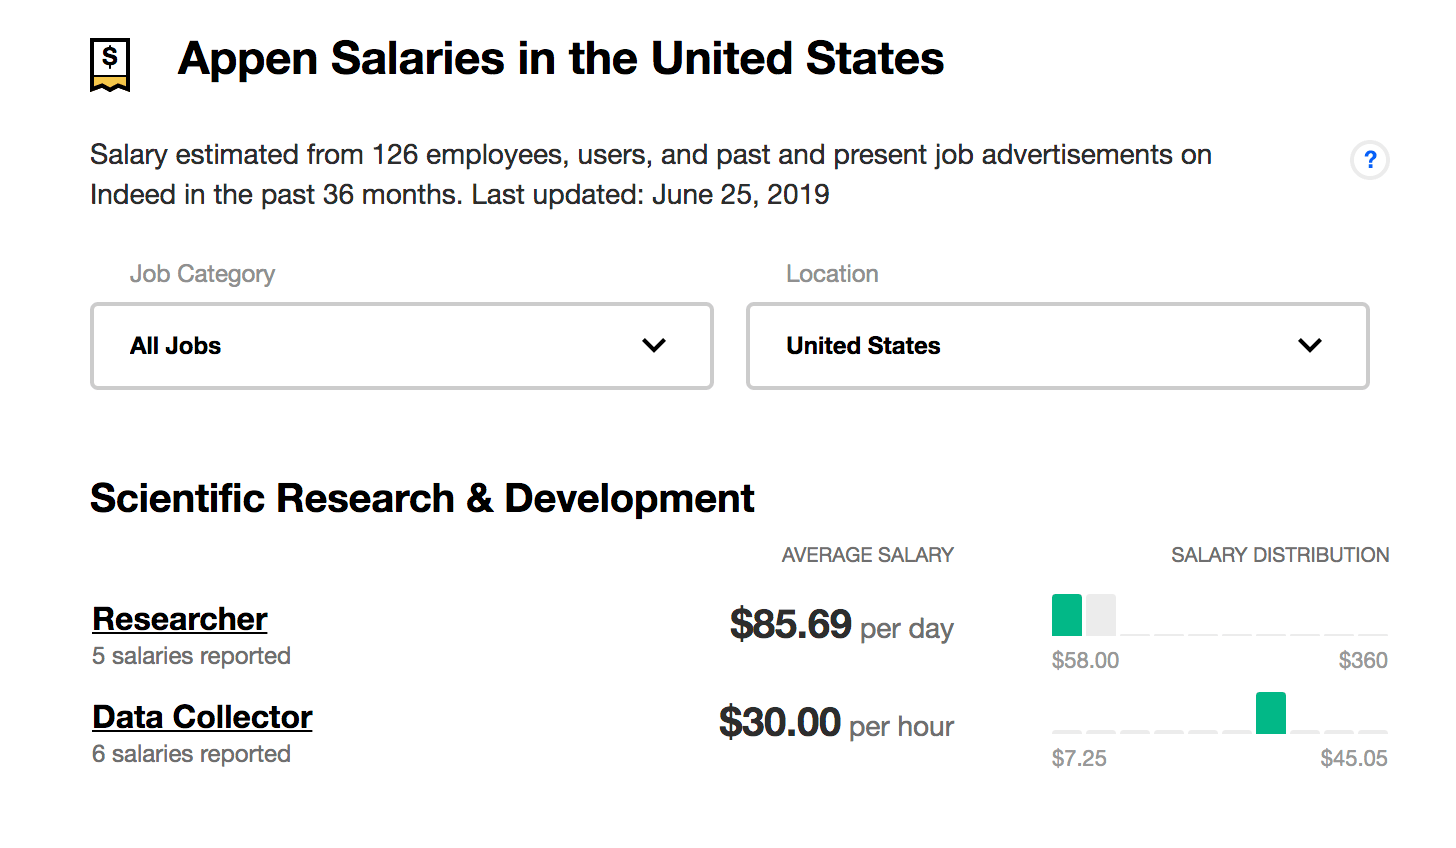 appen salaries in the US